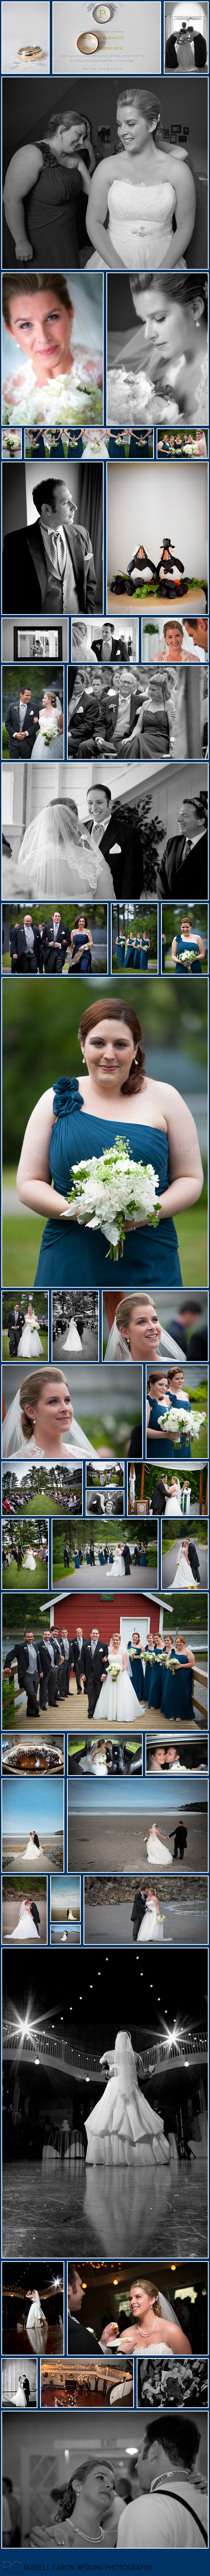 Maine Wedding Photographer, Maine wedding photographers, Maine Wedding Photography